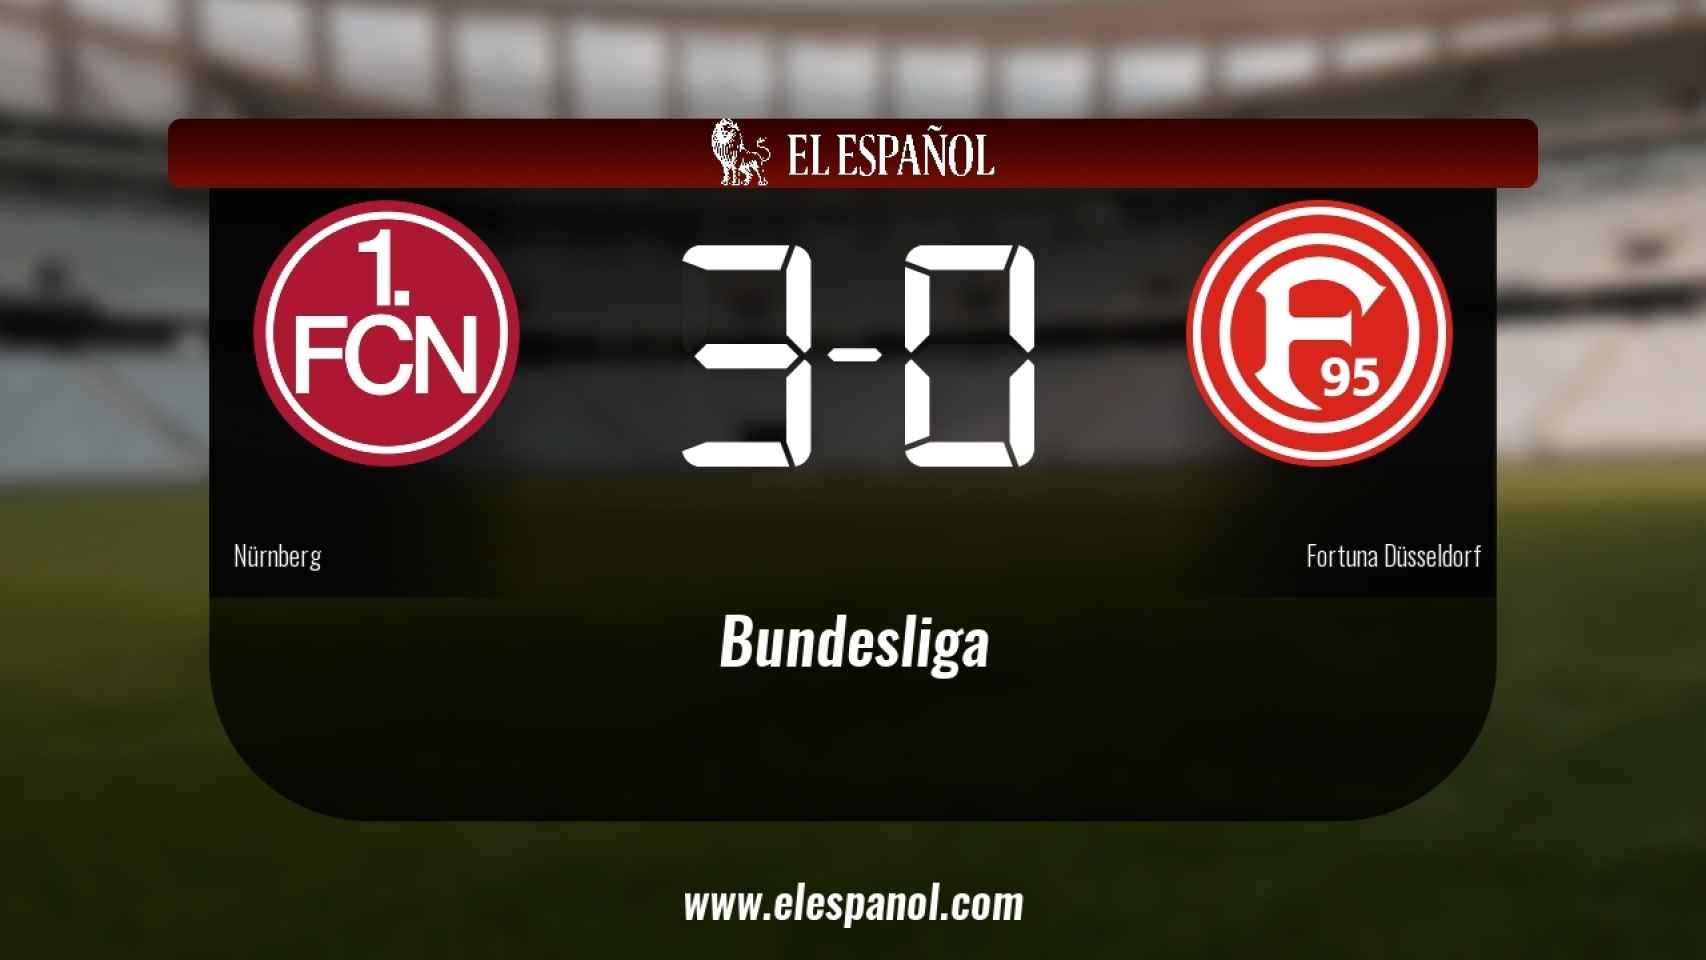 El Nürnberg derrotó al Fortuna Düsseldorf por 3-0